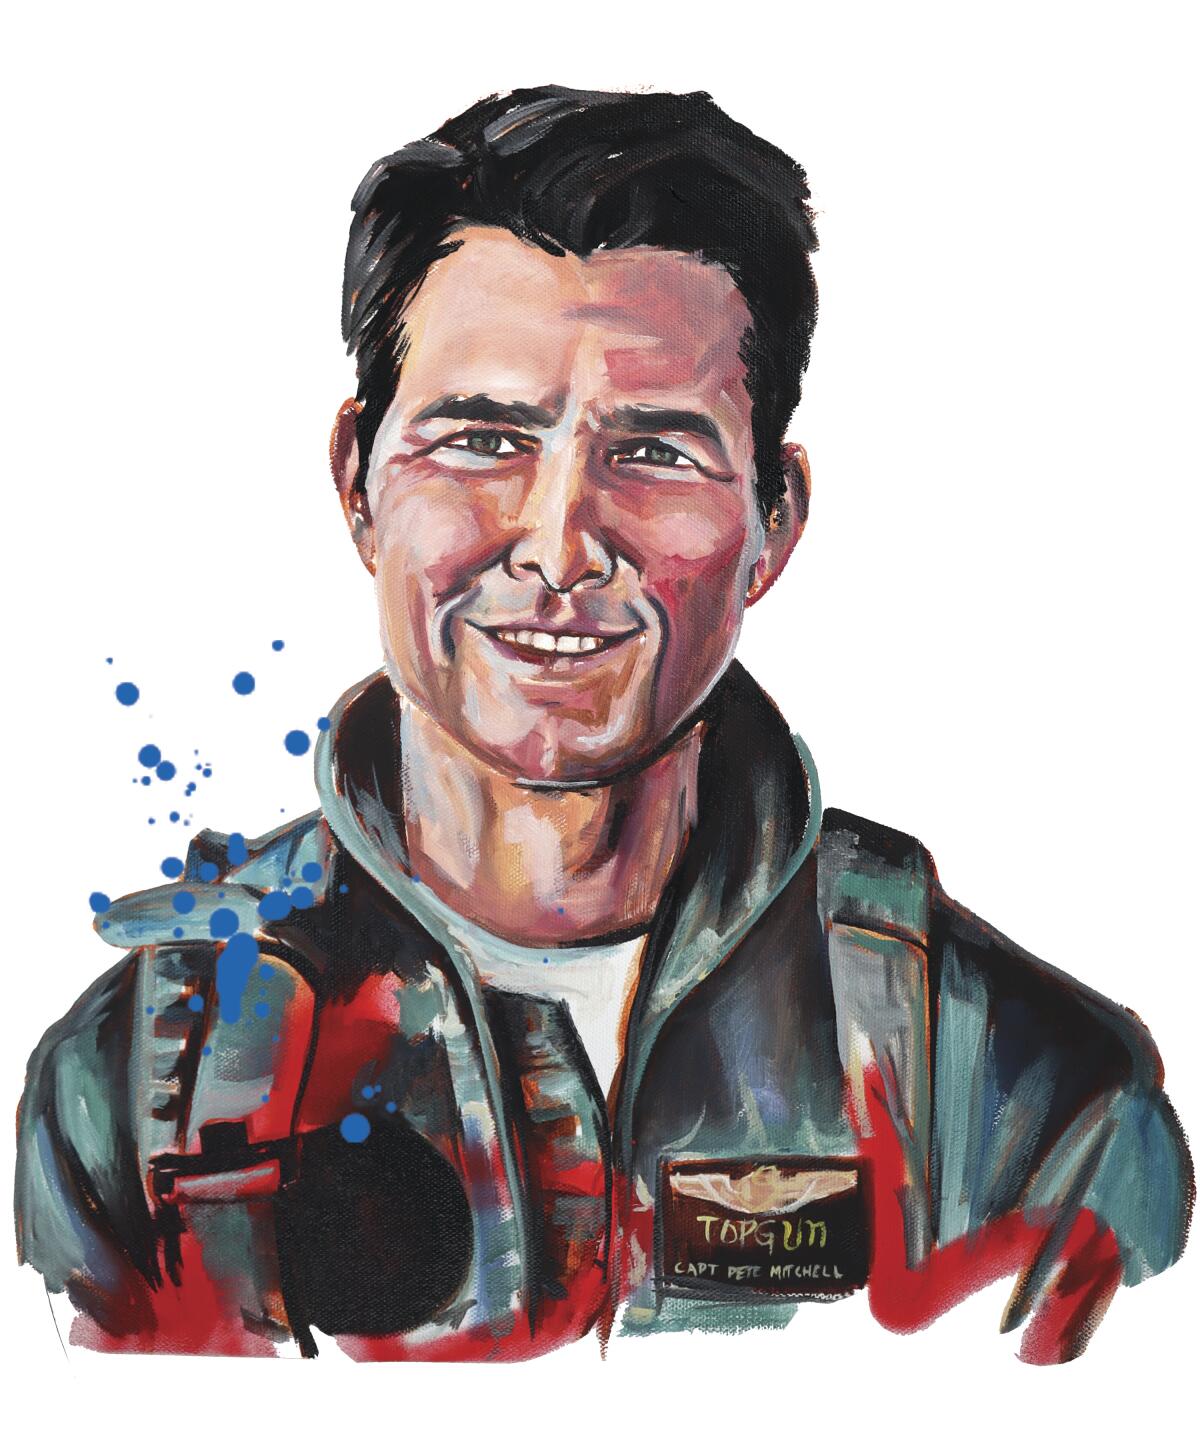 An illustration of Tom Cruise as "Top Gun's" Maverick.